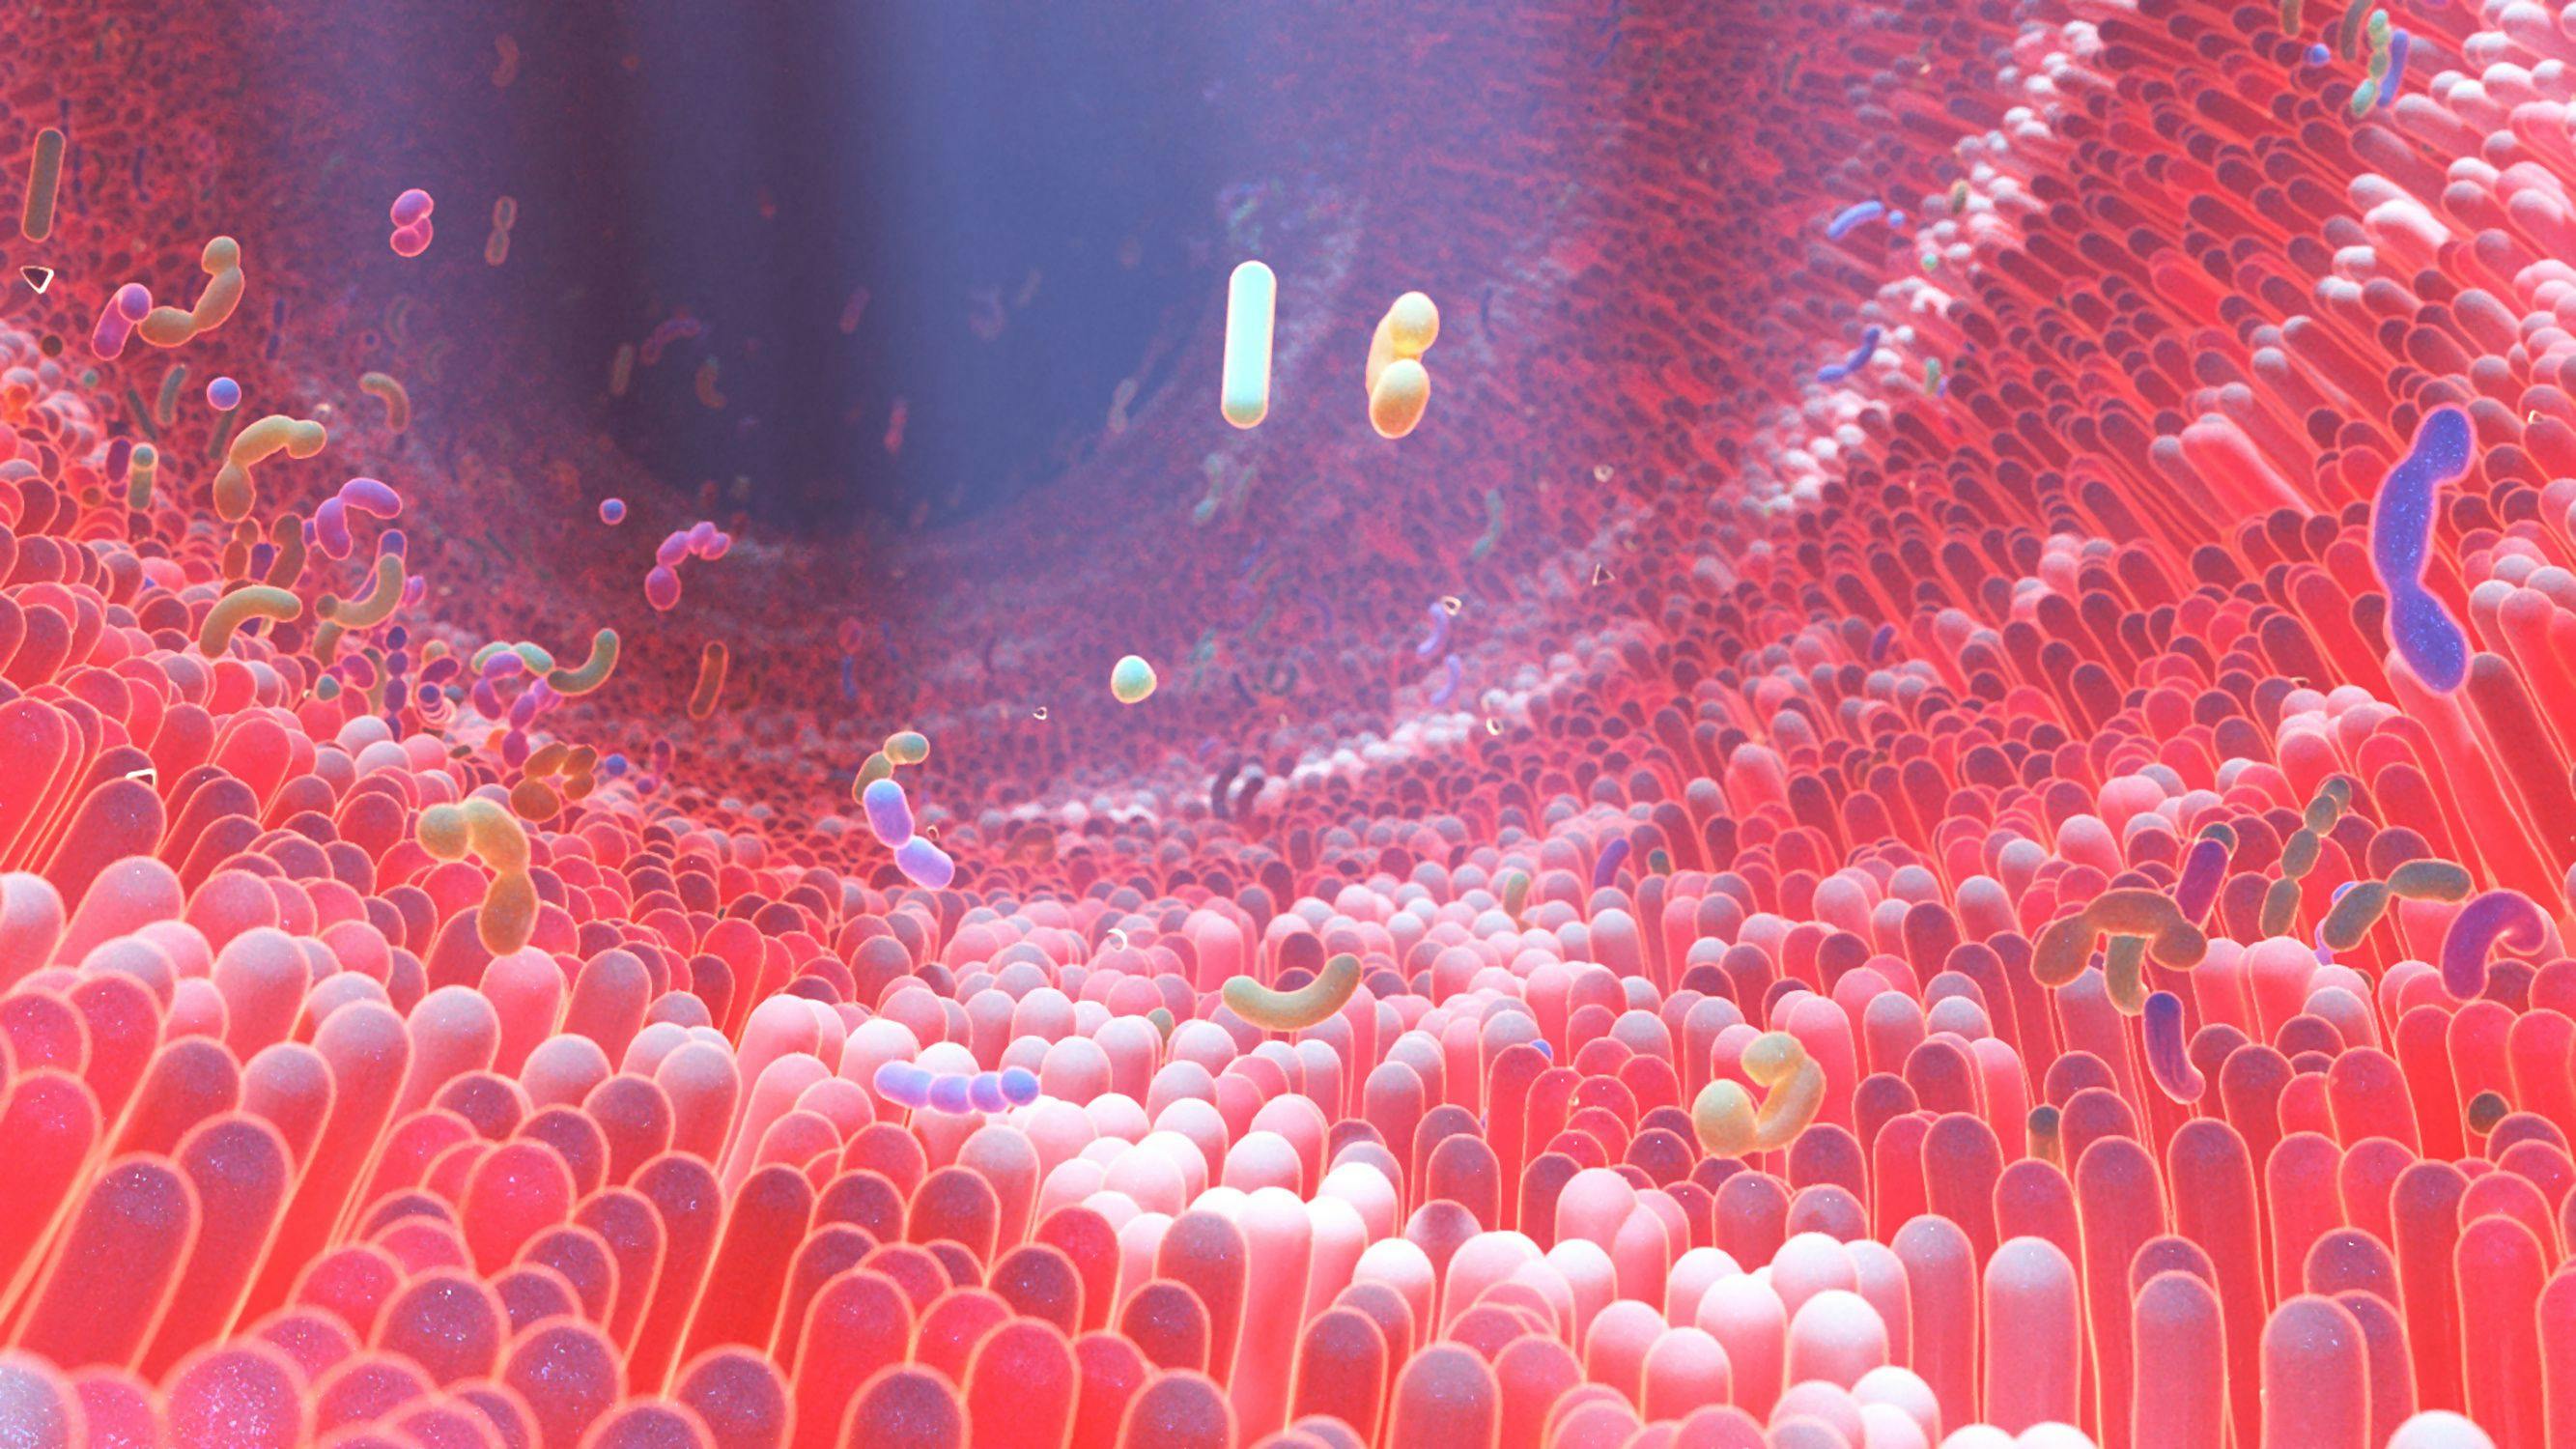 Bacteria in Human Intestine Model | image credit: Alpha Tauri 3D - stock.adobe.com